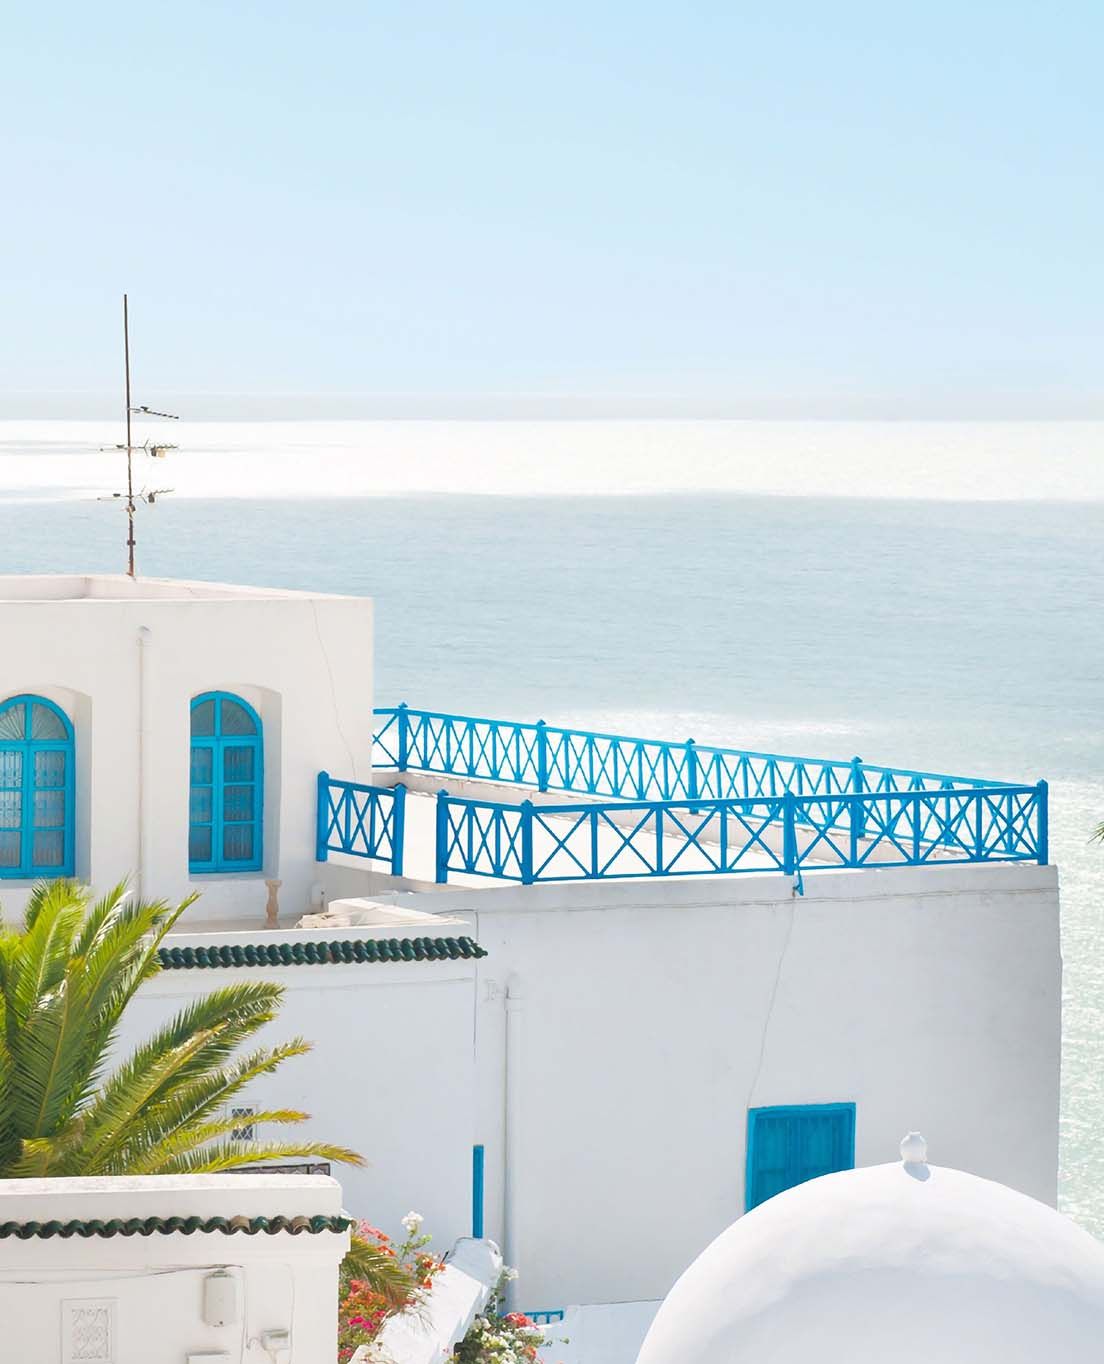 Tunisia at a glance